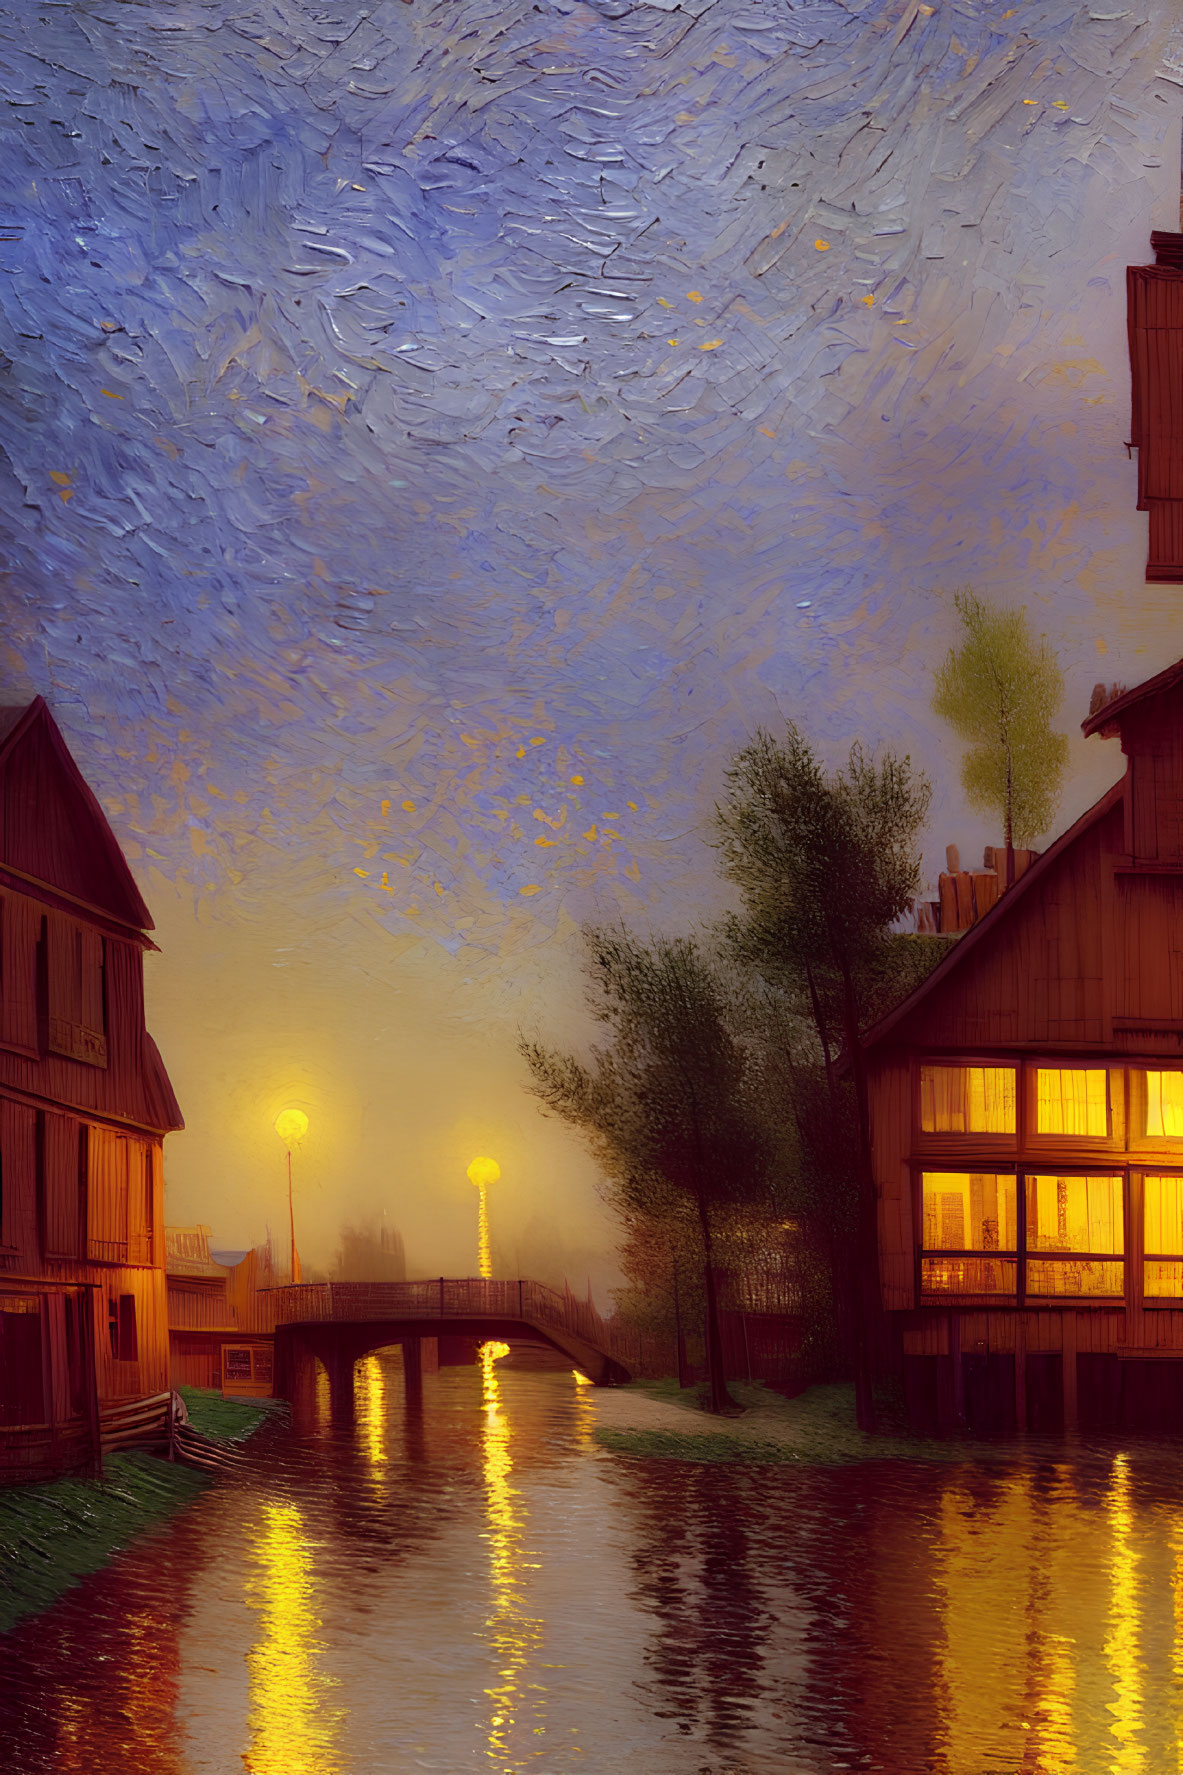 Serene evening digital artwork with illuminated buildings and swirling twilight sky